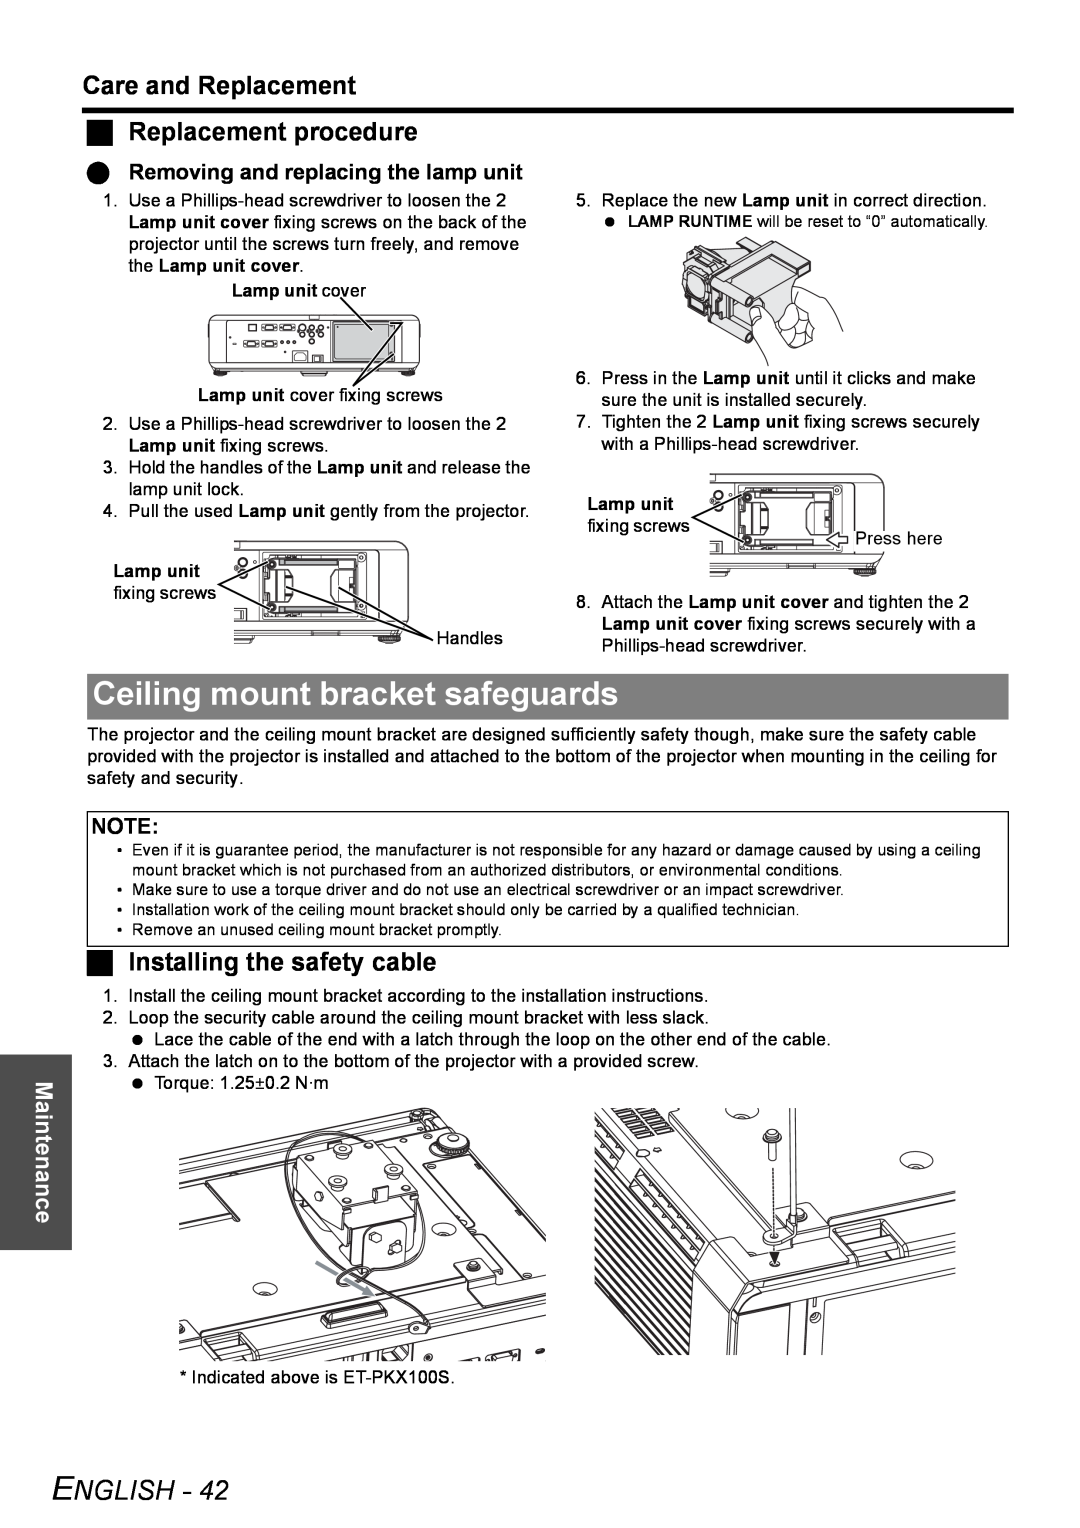 Panasonic PT-FW100NTU Ceiling mount bracket safeguards, Care and Replacement Replacement procedure, English, Maintenance 